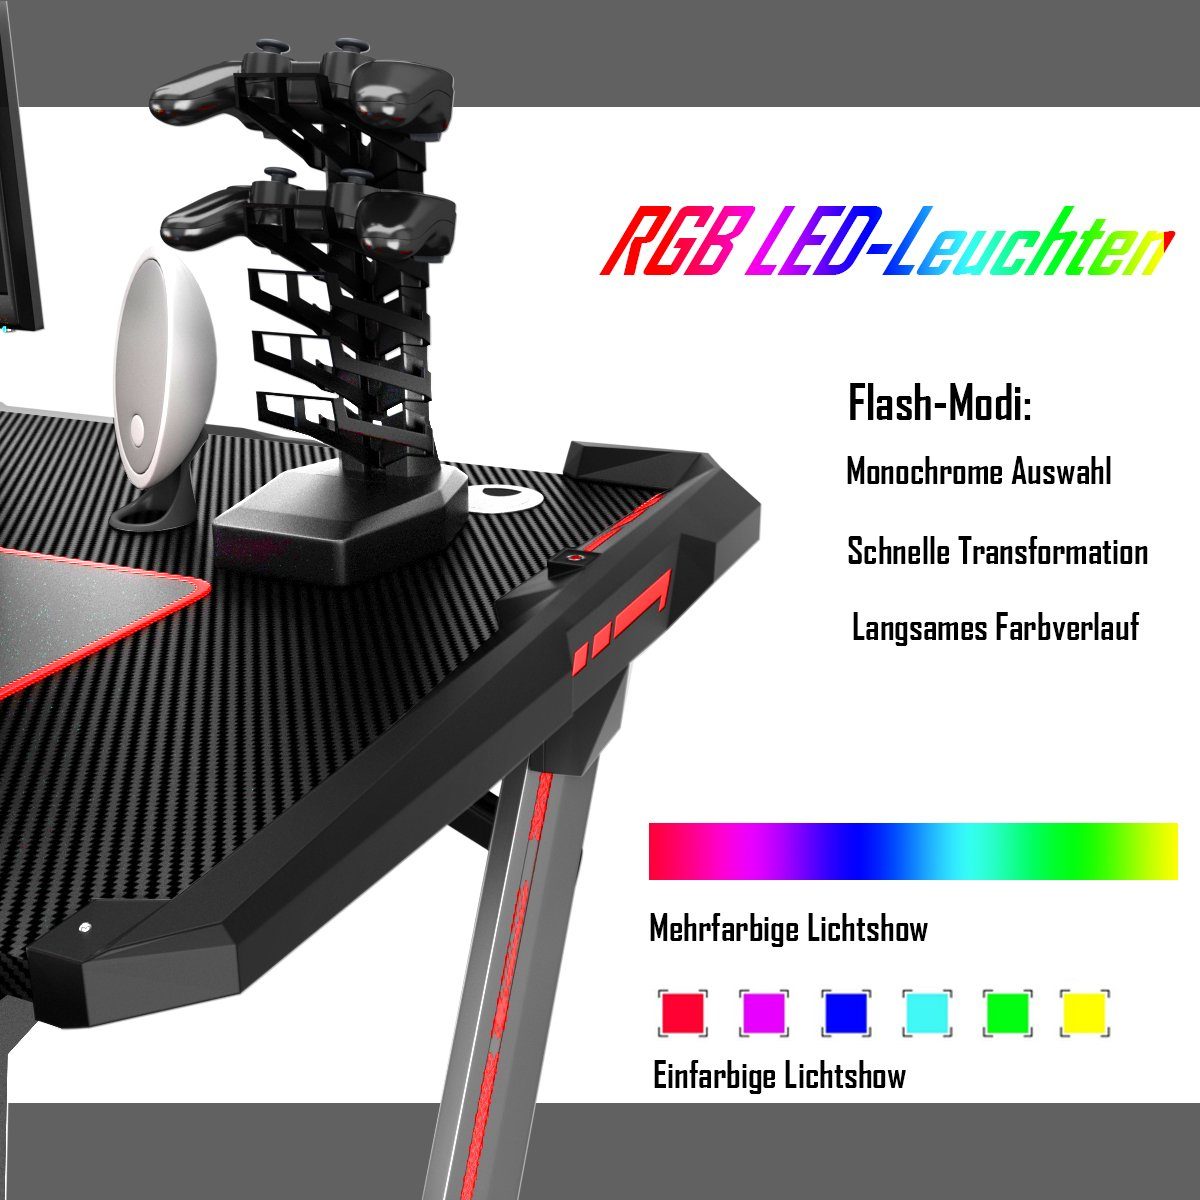 COSTWAY Gamingtisch, RGB-Led, USB, 120cm 4 Z-förmig Controller-Halterung mit